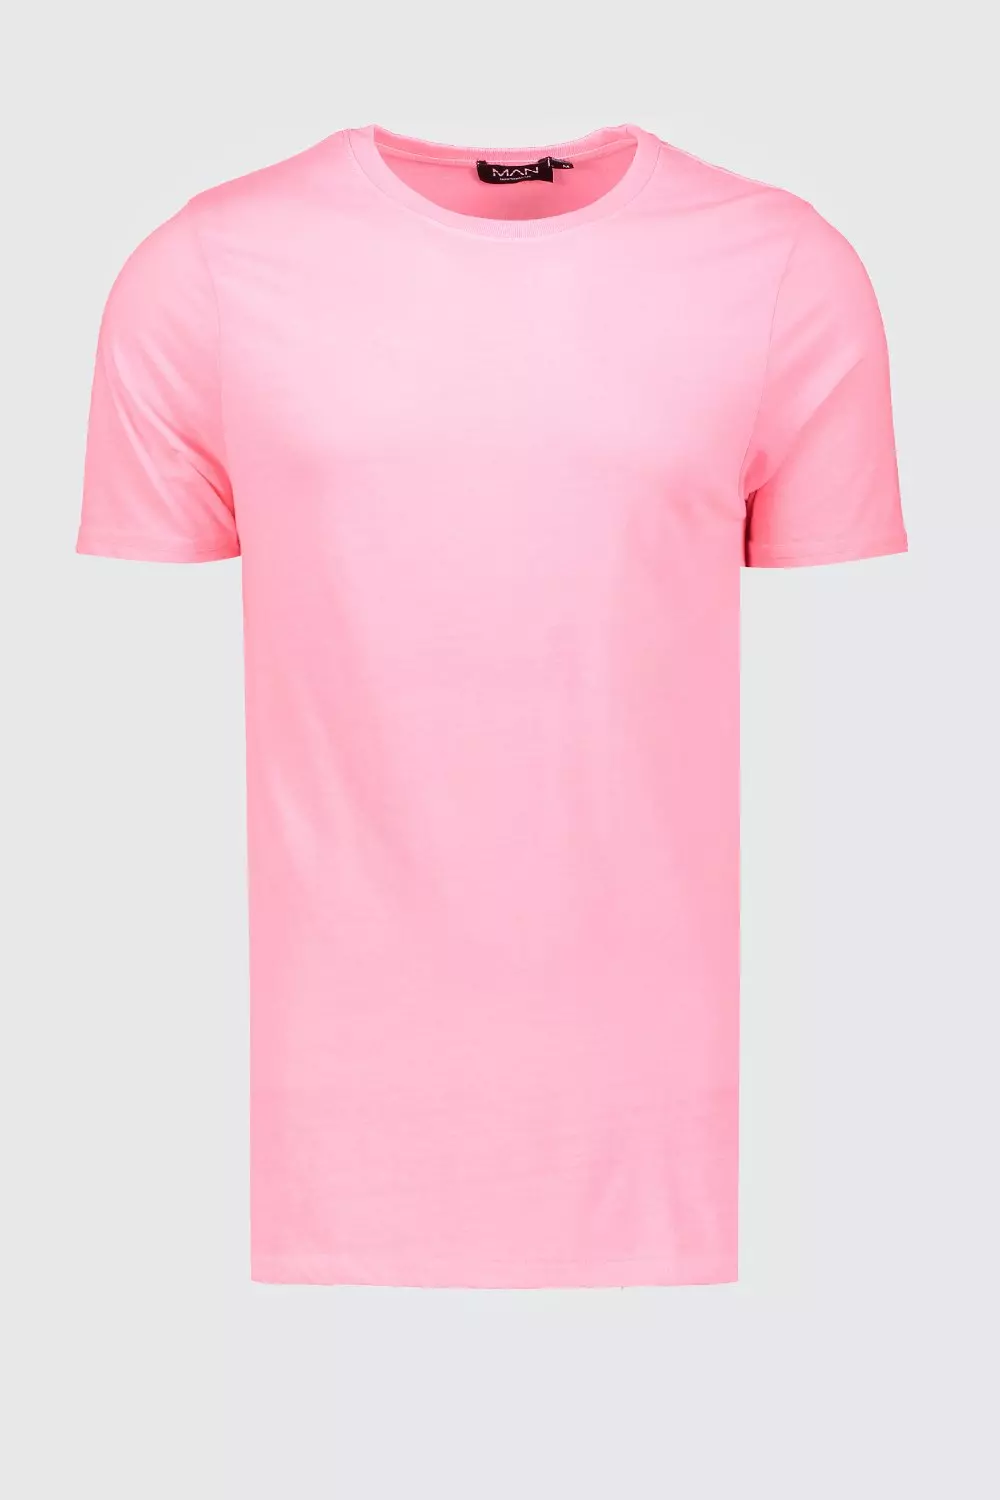 Yazbek Men’s Crew Neck Short Sleeve T-Shirt (Neon Pink) 2XL / Florida